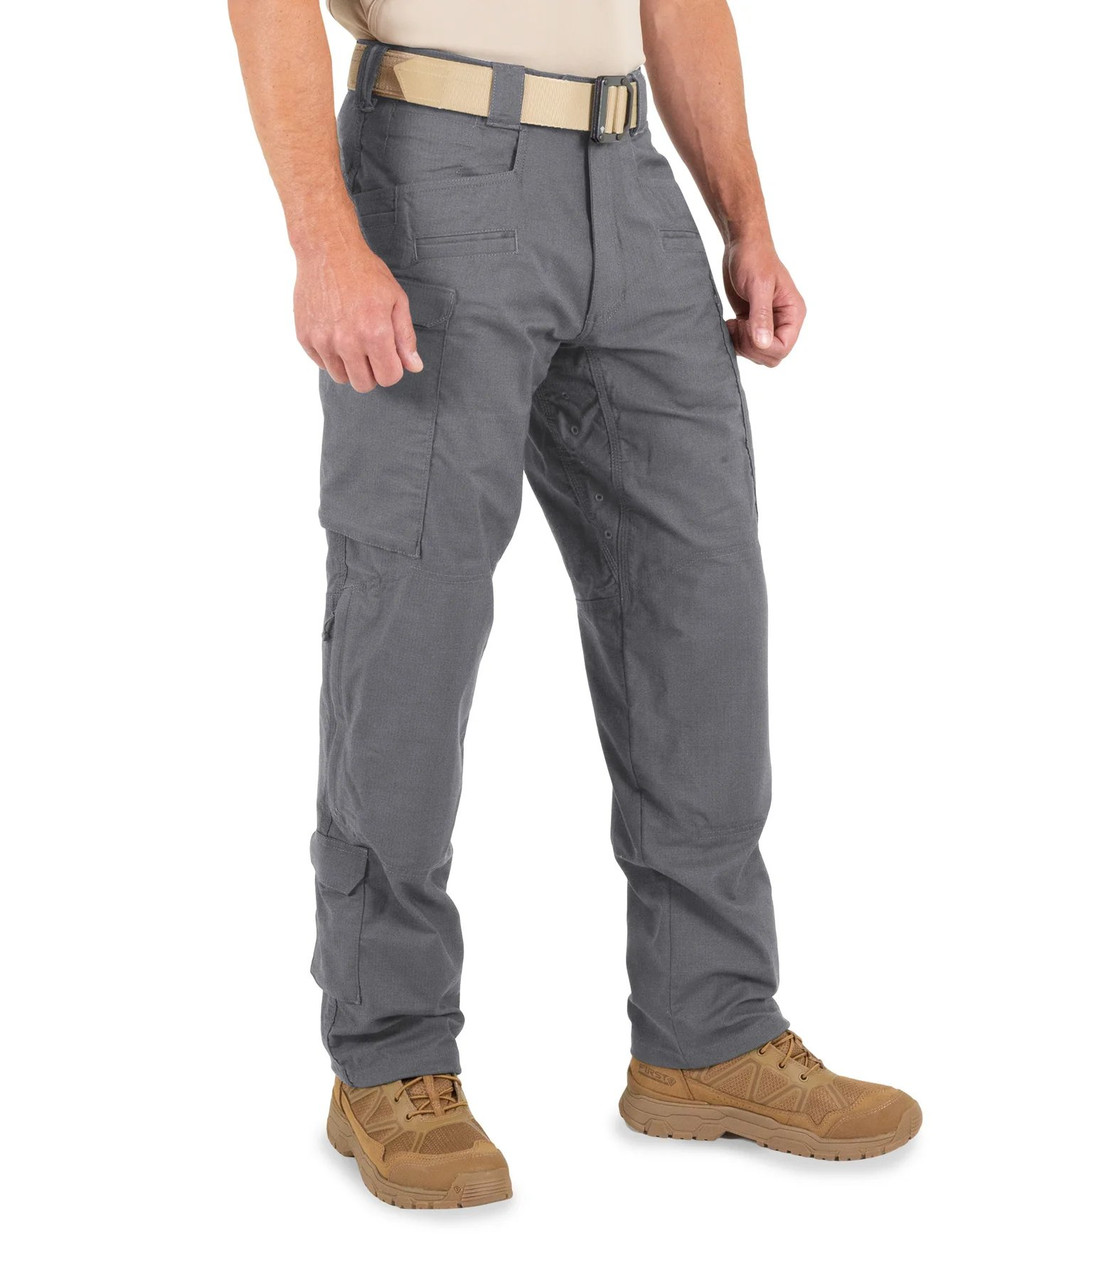 First Tactical 114002 Men's Defender Pants